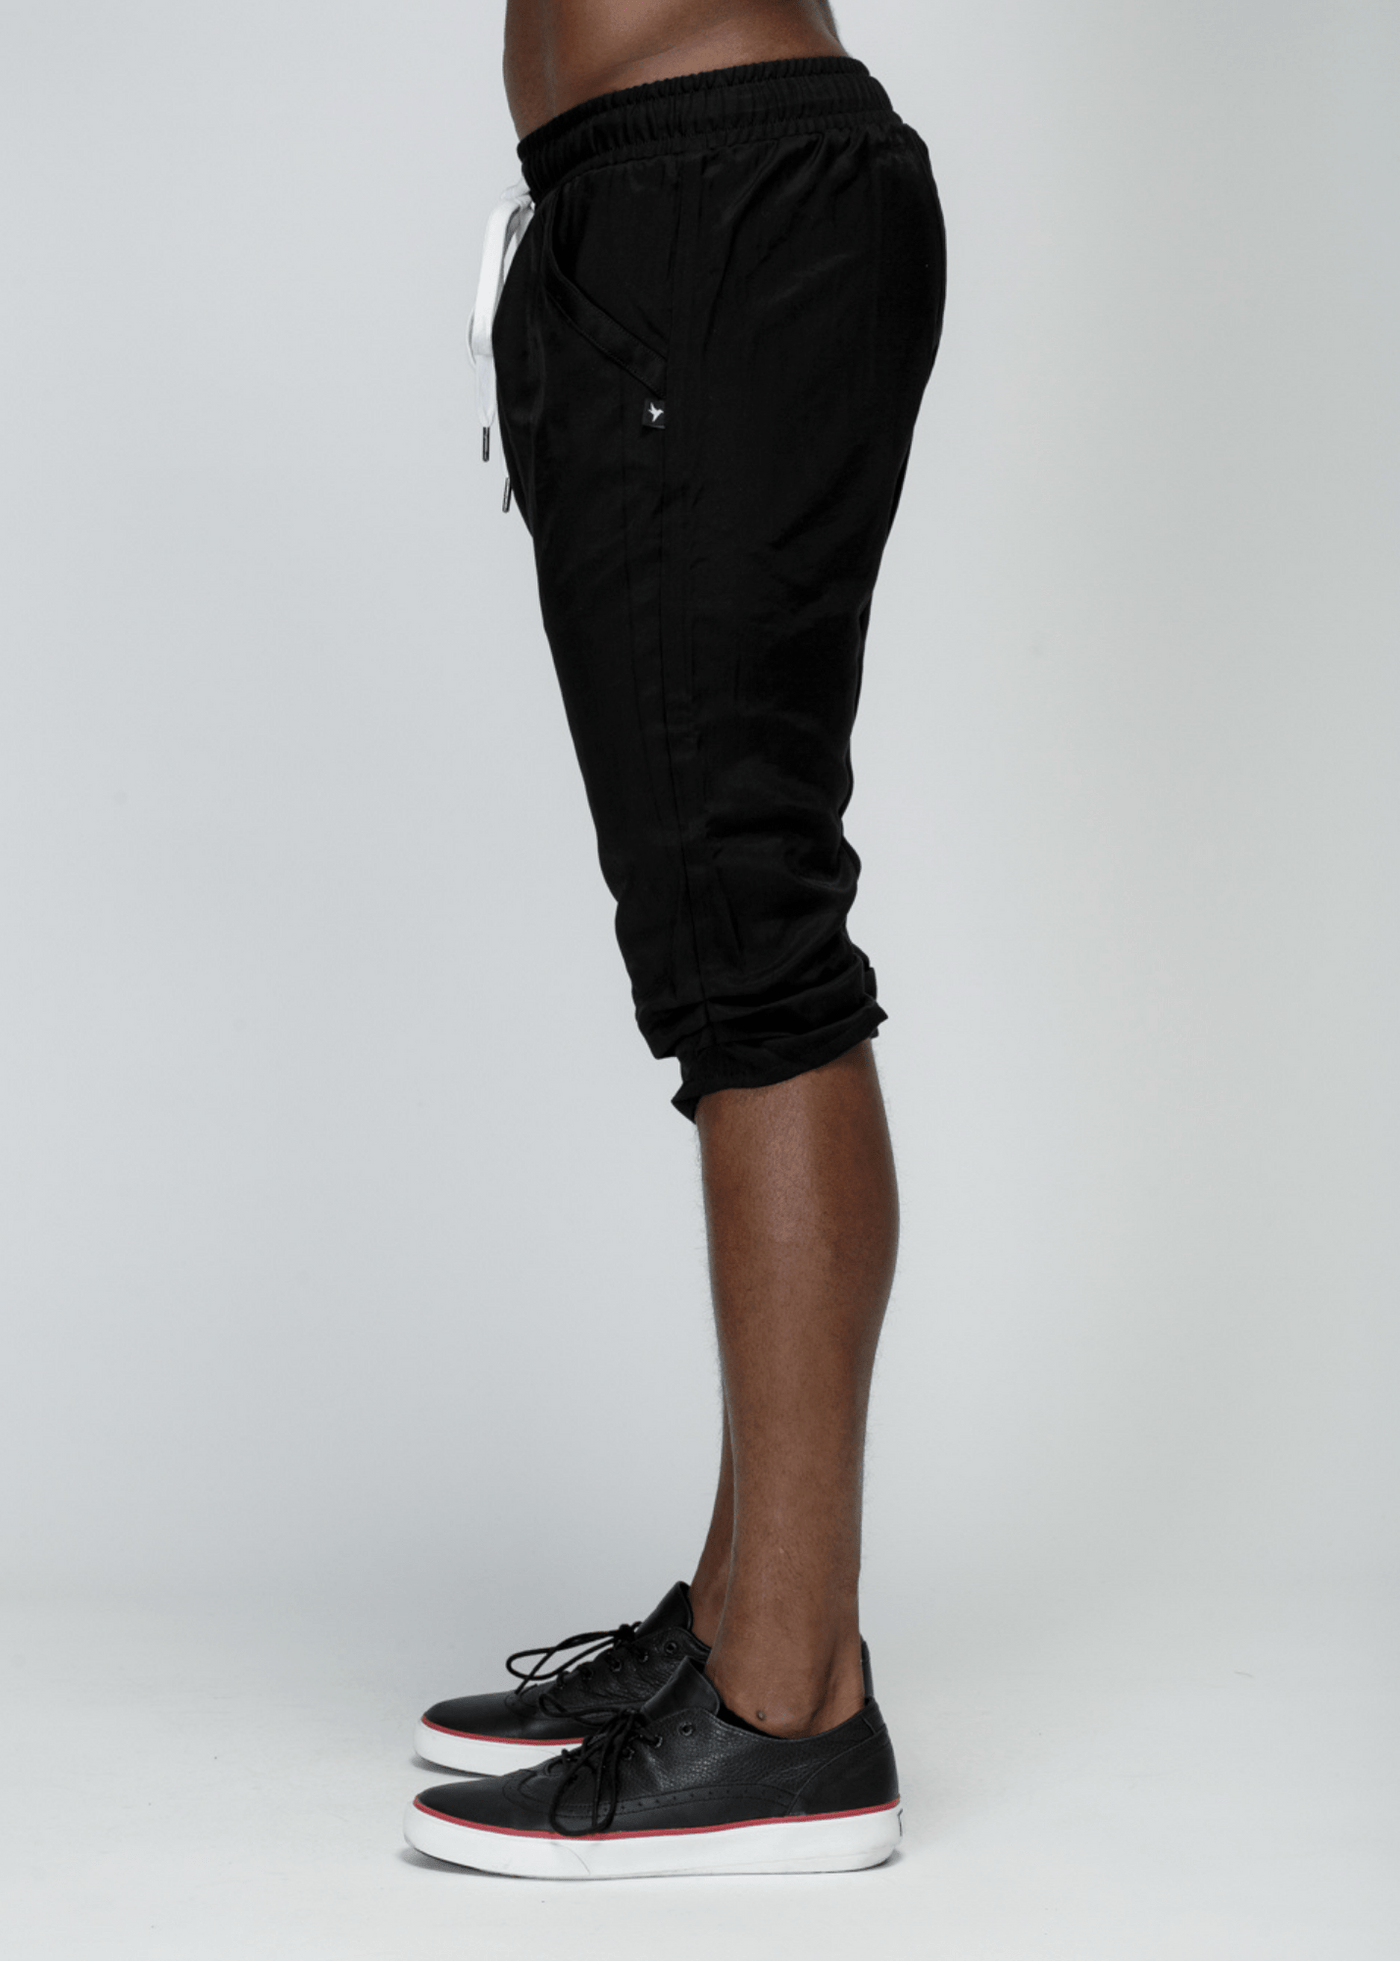 Konus Men's Drop Crotch Over Knee Shorts in Black by Shop at Konus